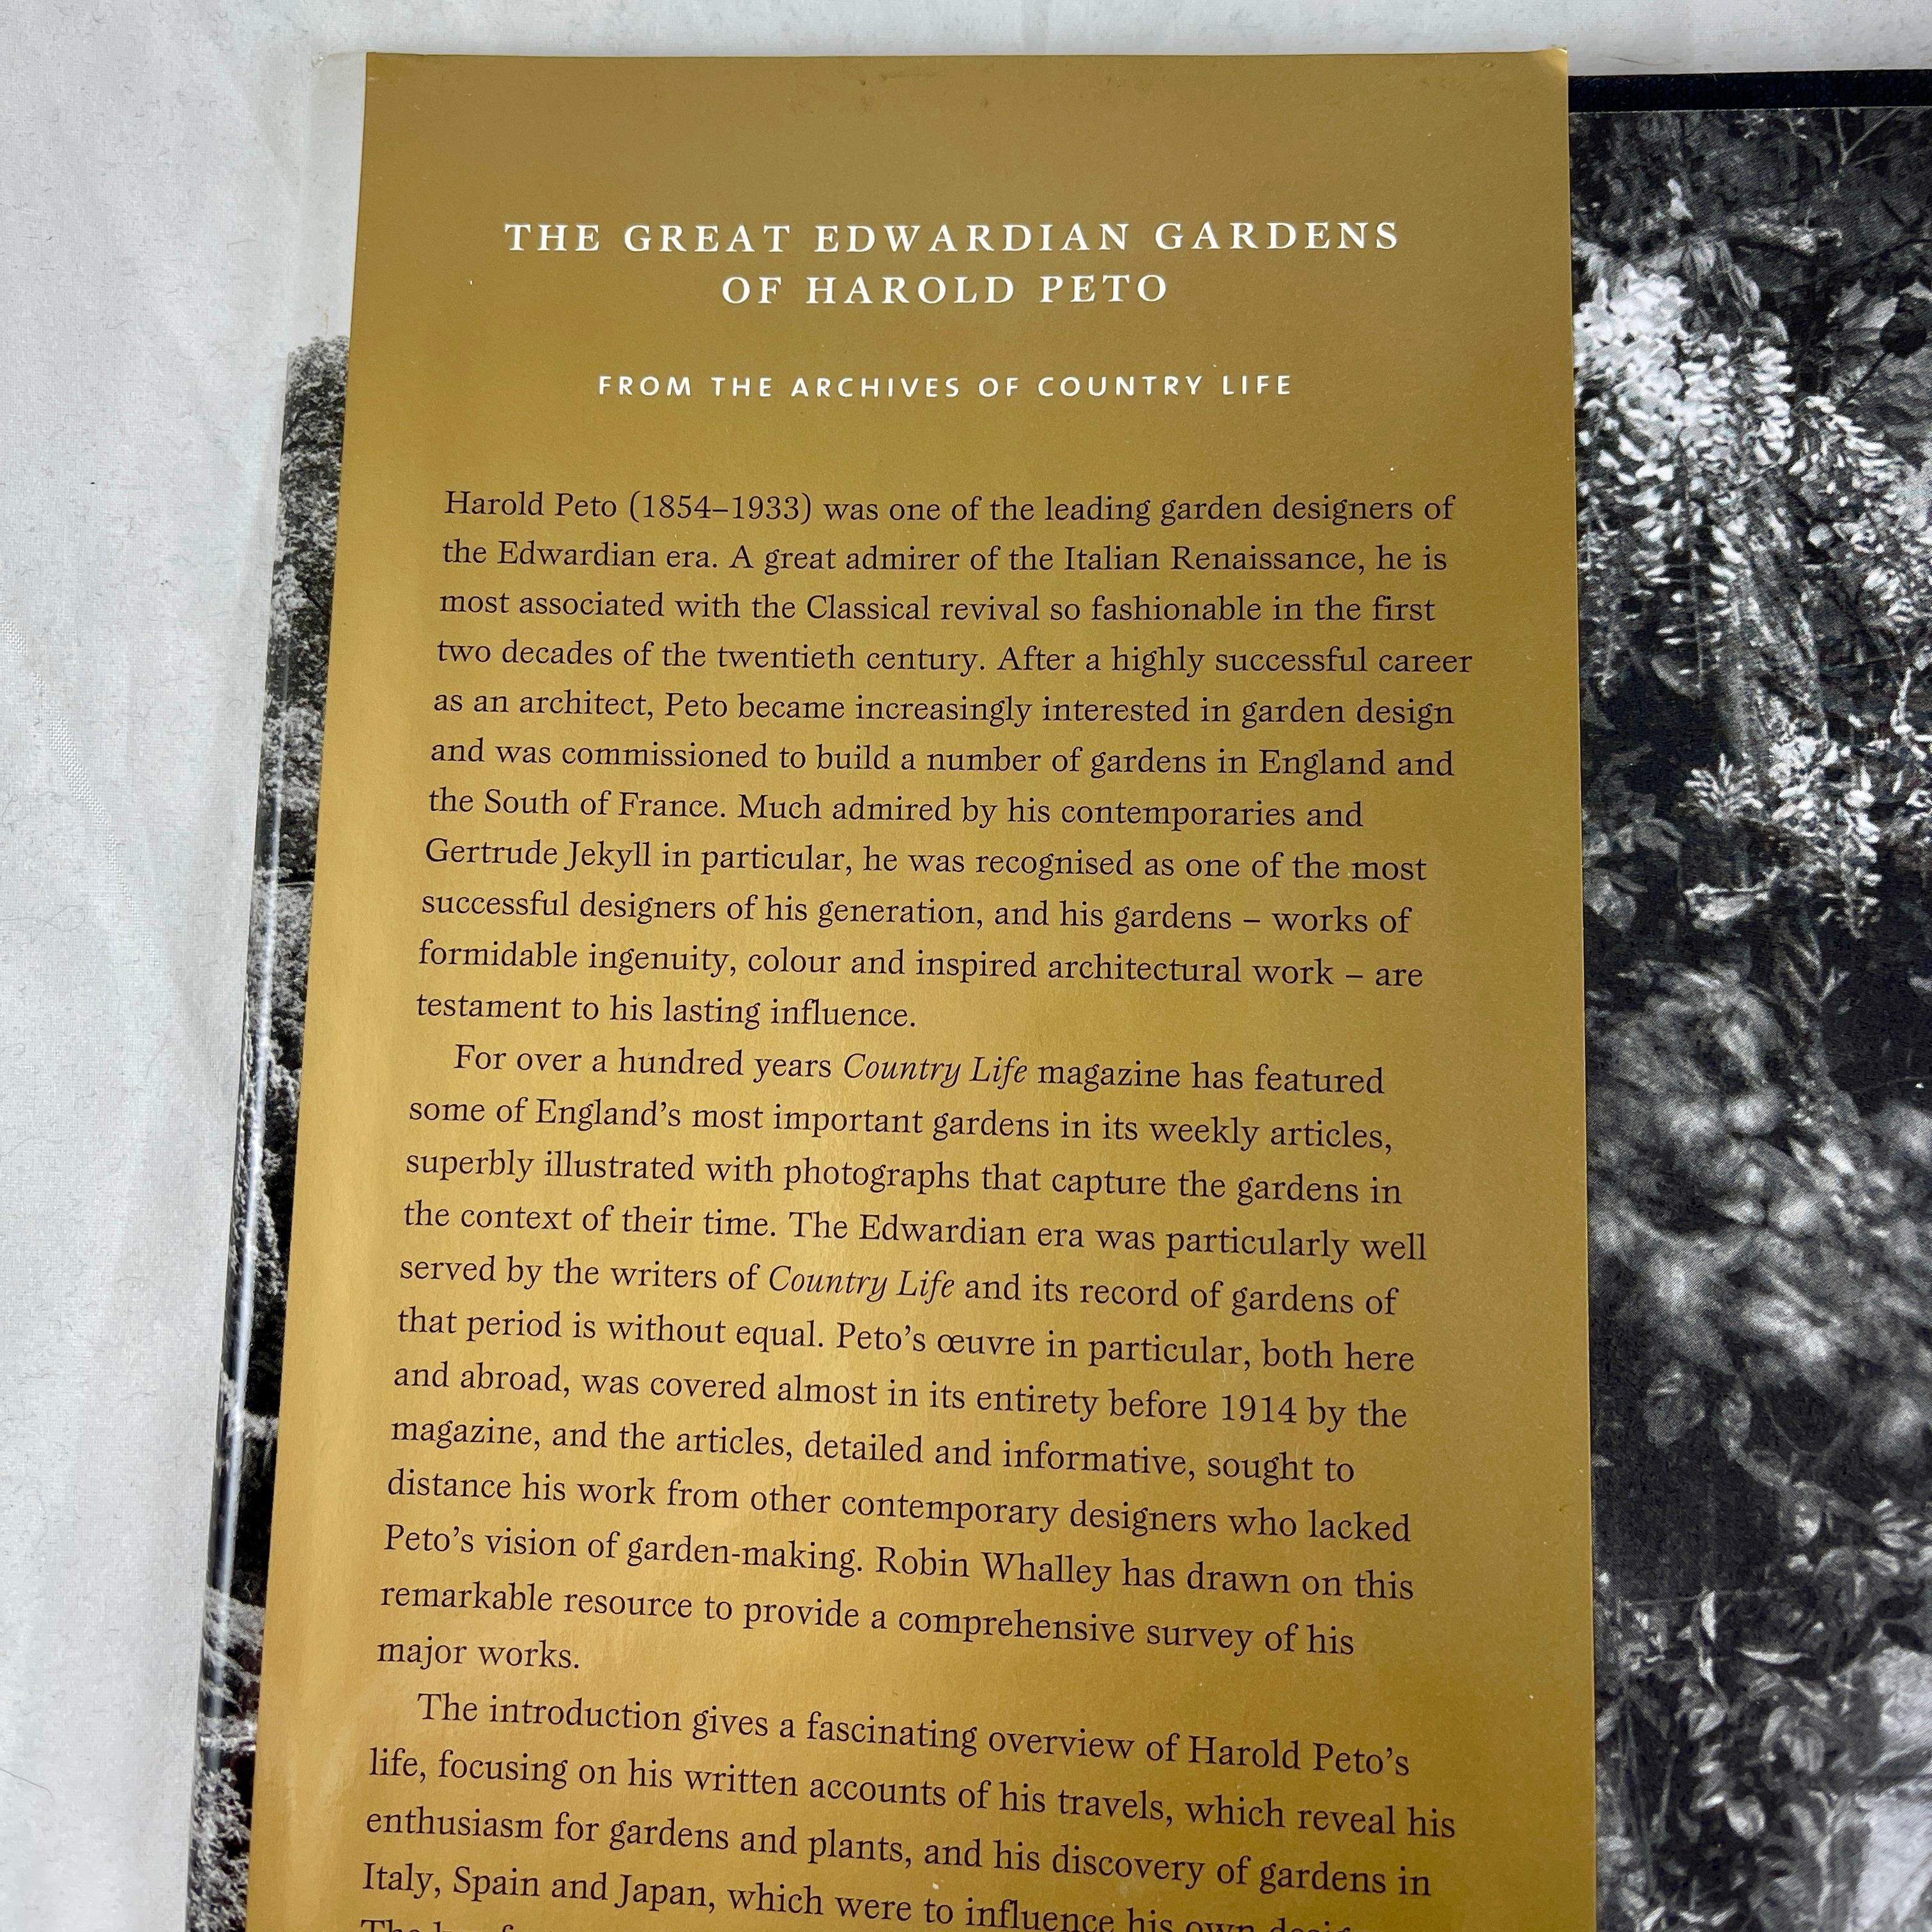 Machine-Made The Great Edwardian Gardens of Harold Peto, Hardcover Book –2007